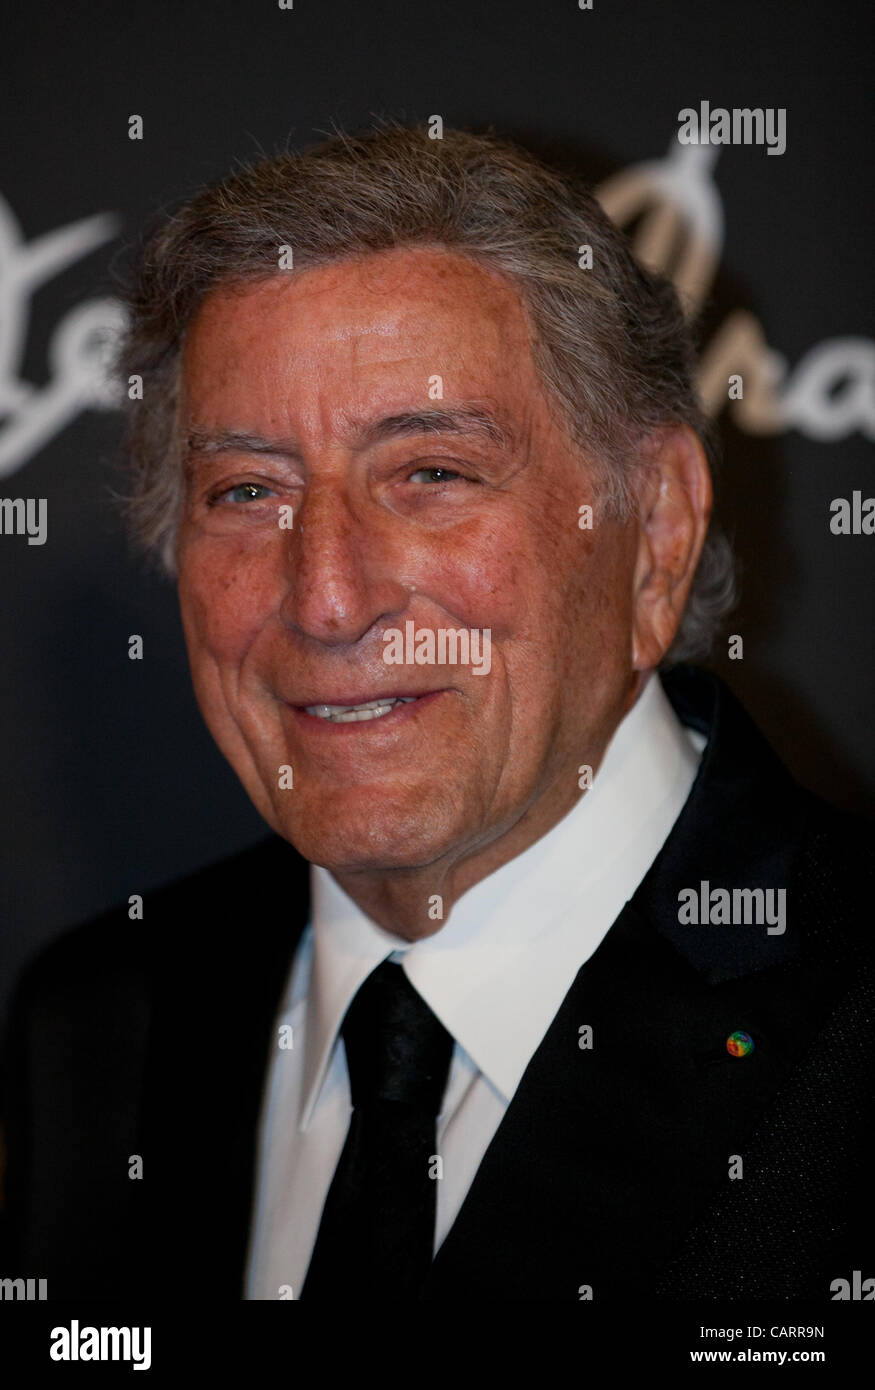 Tony Bennett at the Logie Awards, Melbourne, April 15, 2012. Stock Photo